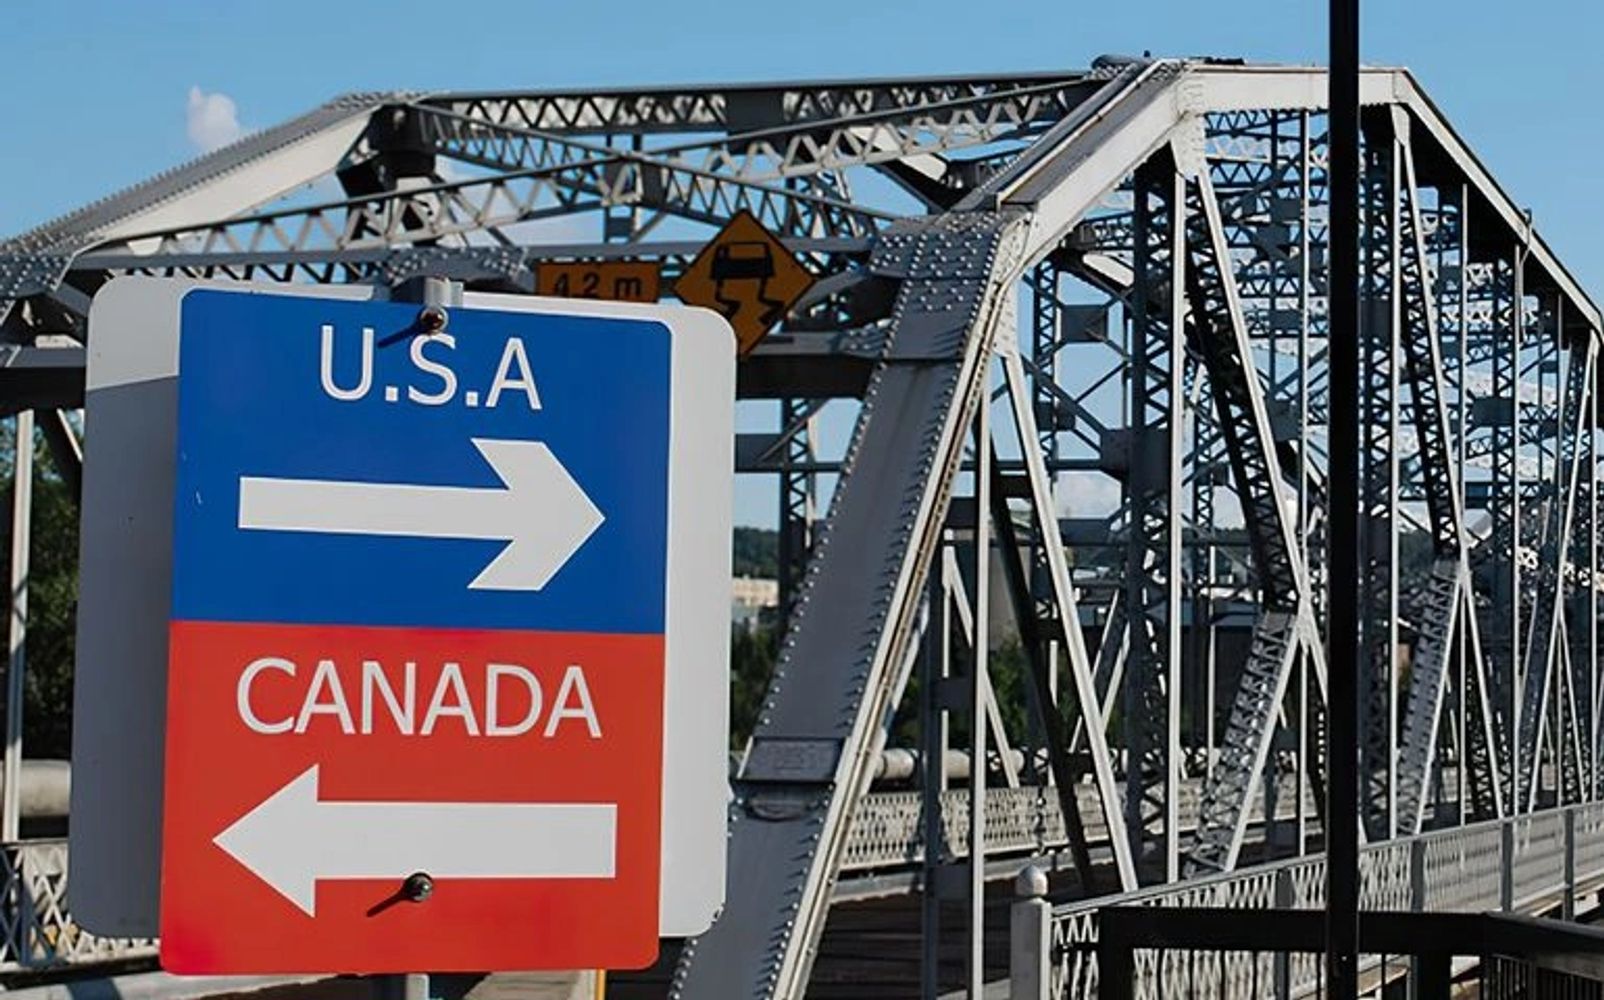 Canada U.S.A Bridge. Customs